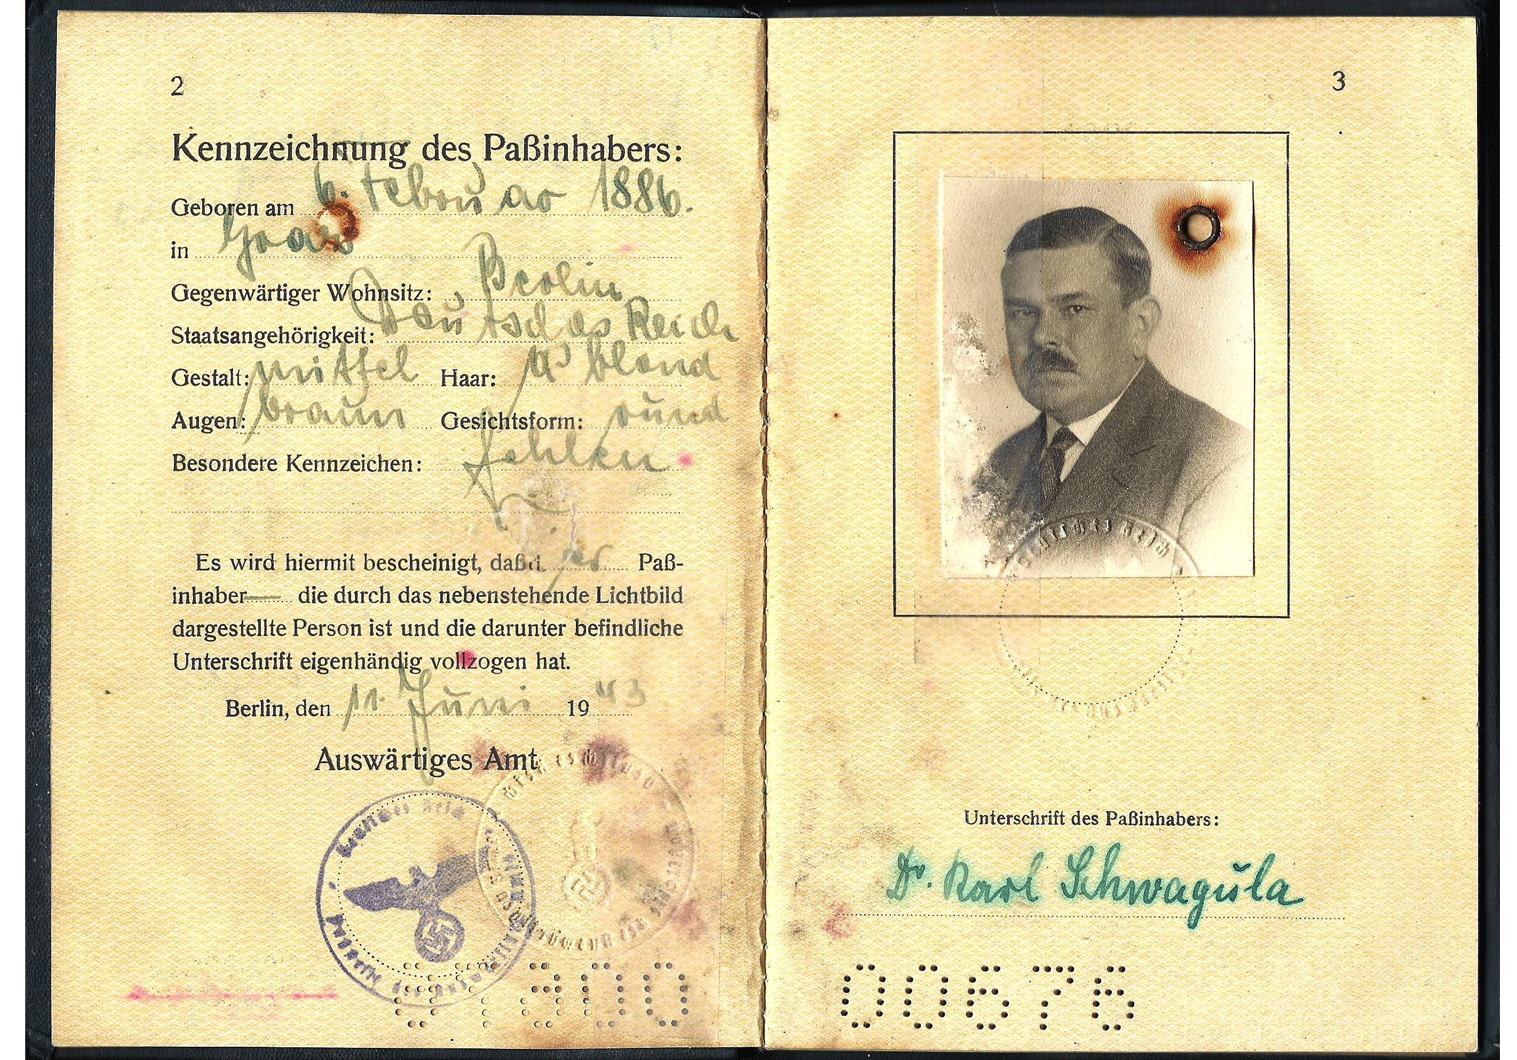 WW2 German diplomatic passport.